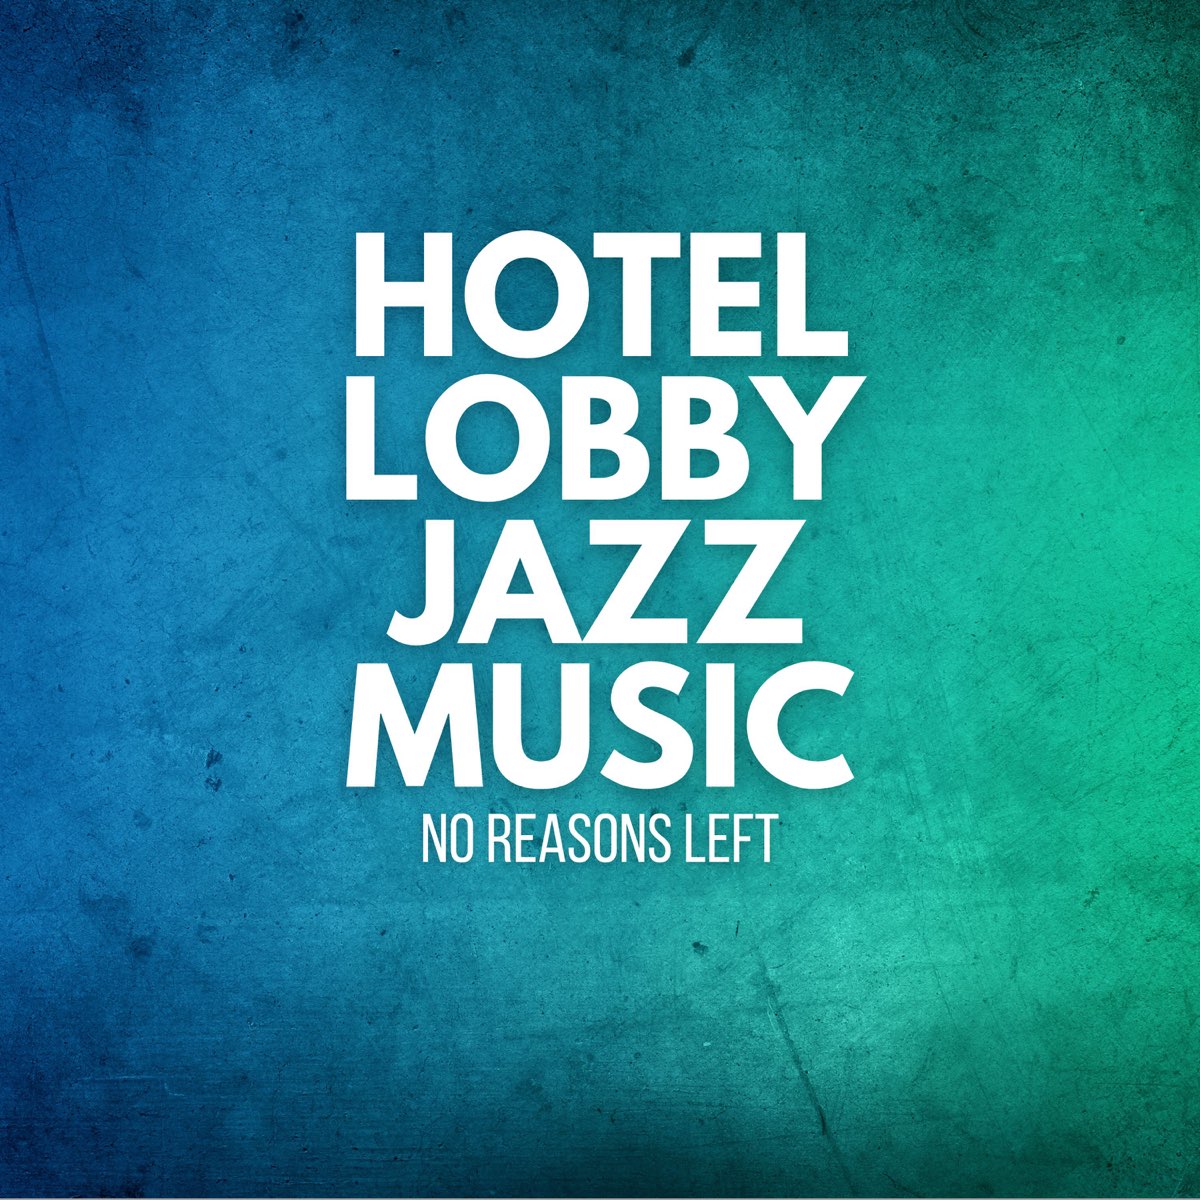 ‎No Reasons Left - Album by Hotel Lobby Jazz Music - Apple Music